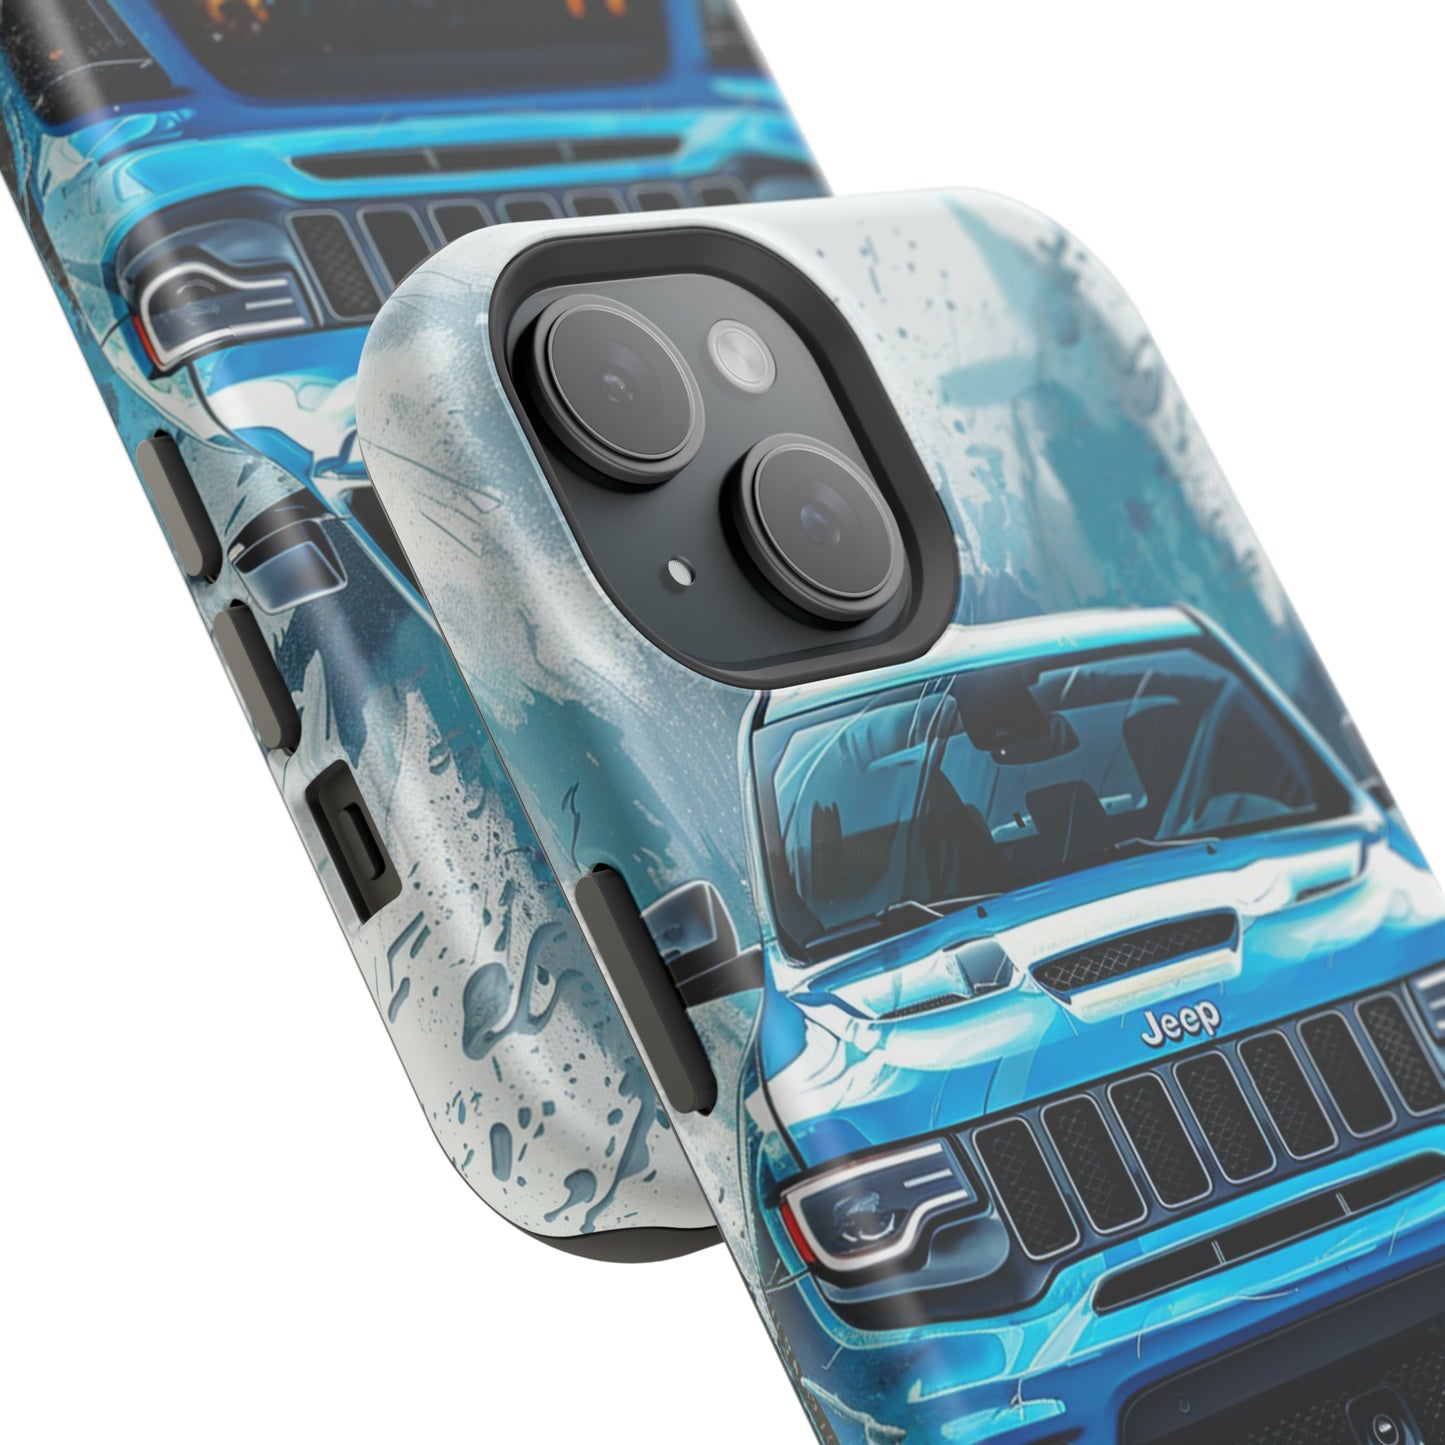 Jeep SRT Trackhawk Ice Blue MagSafe Tough iPhone Case